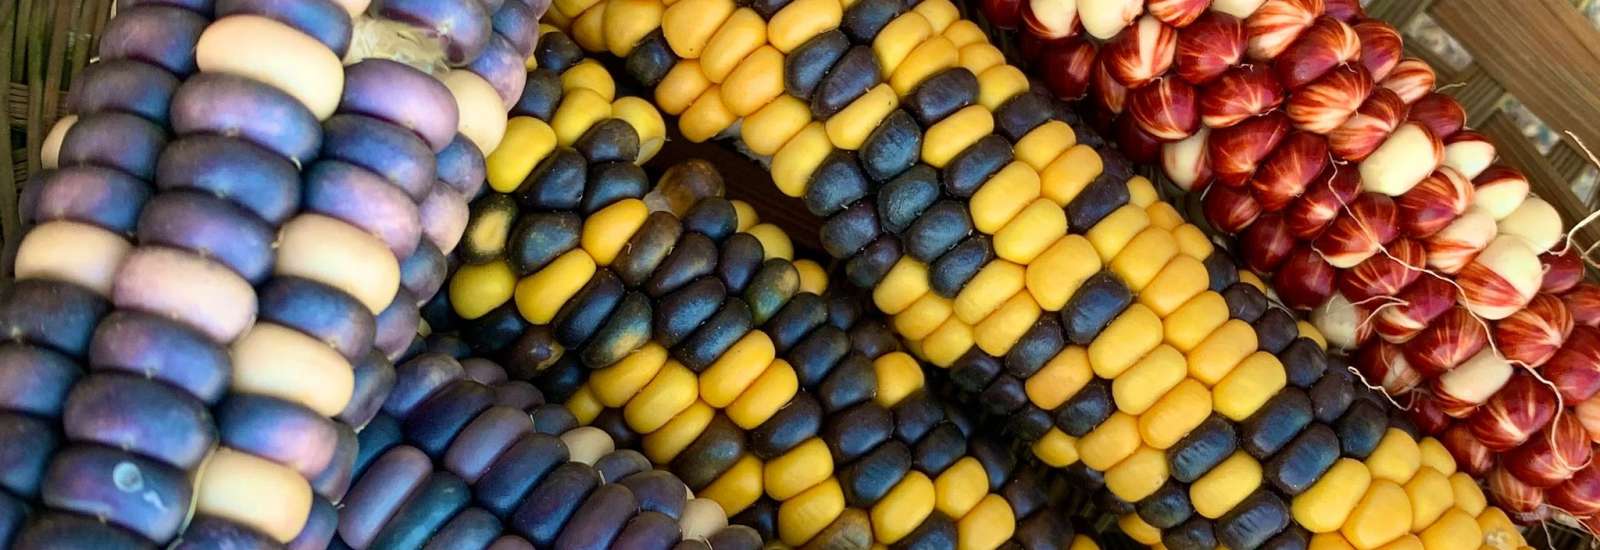 Corn: A Cross-Cultural Celebration